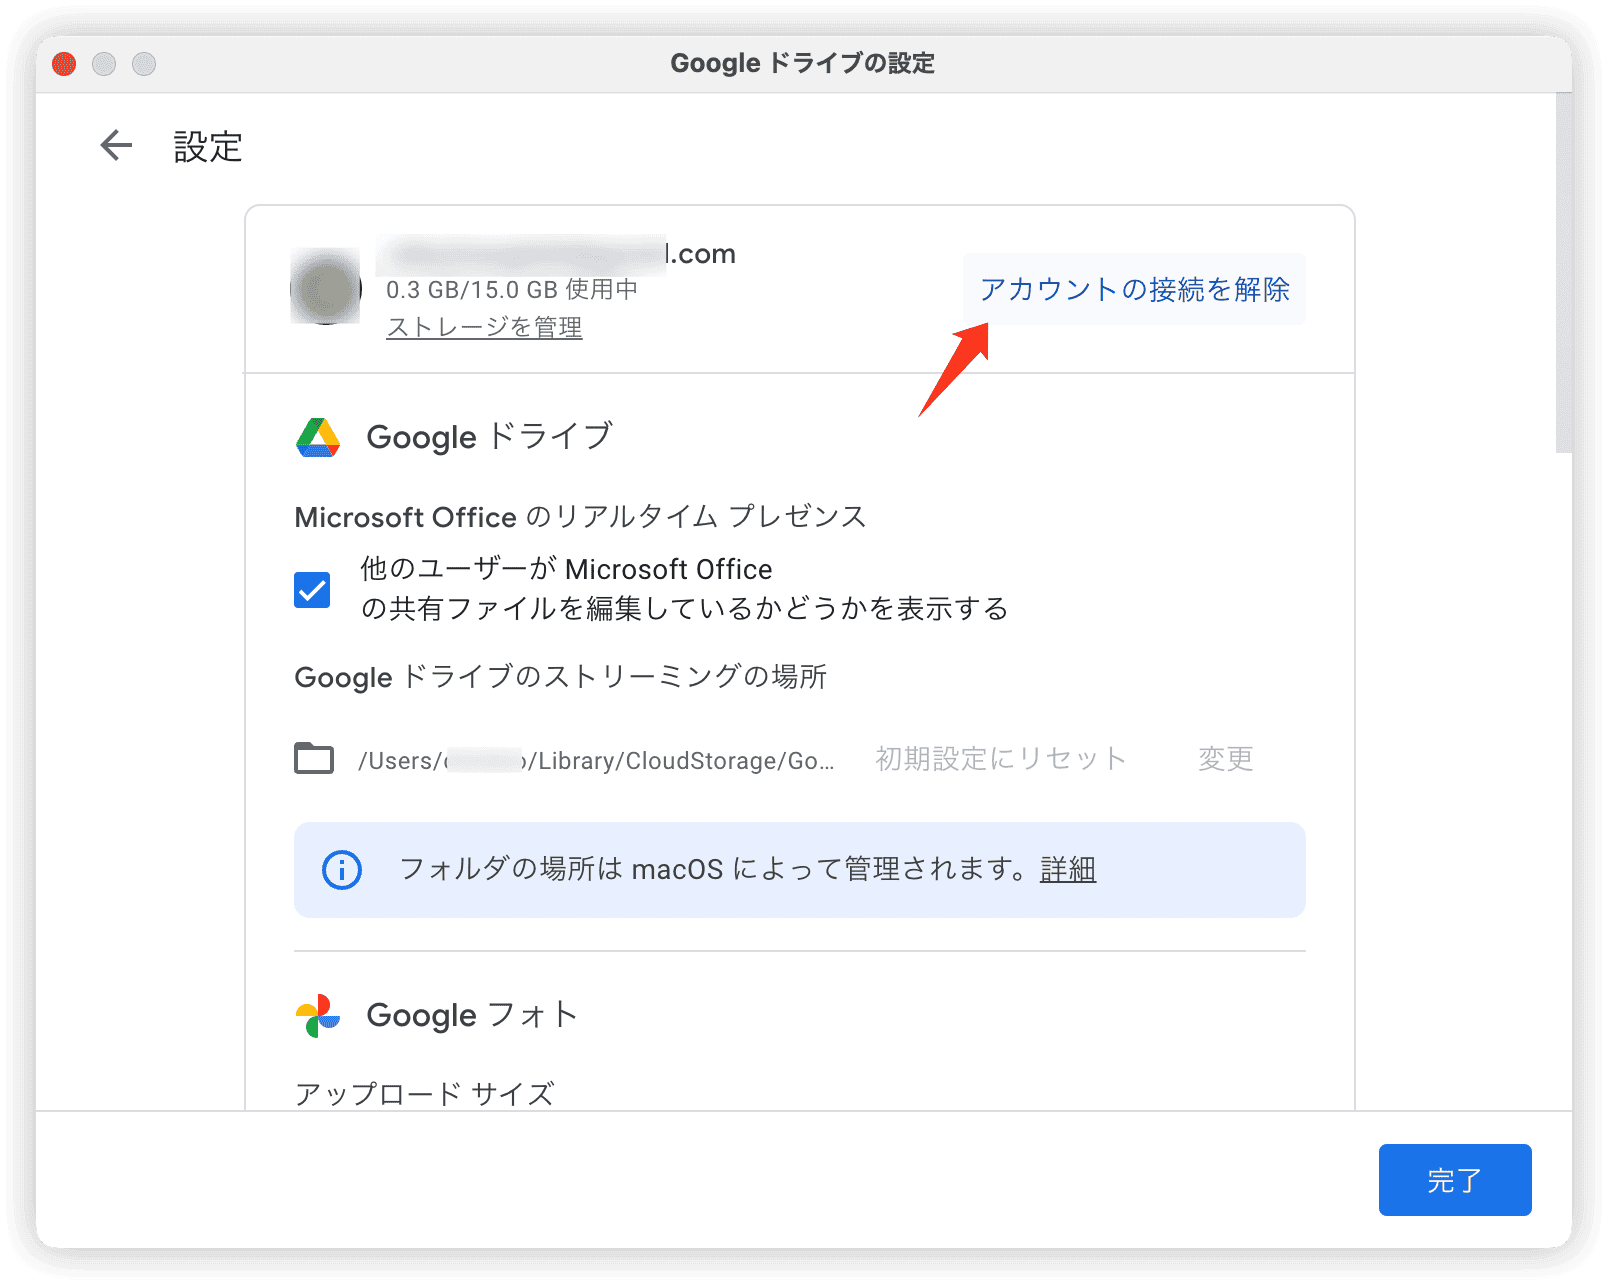 Google Driveアカウントの接続を解除する - 解除